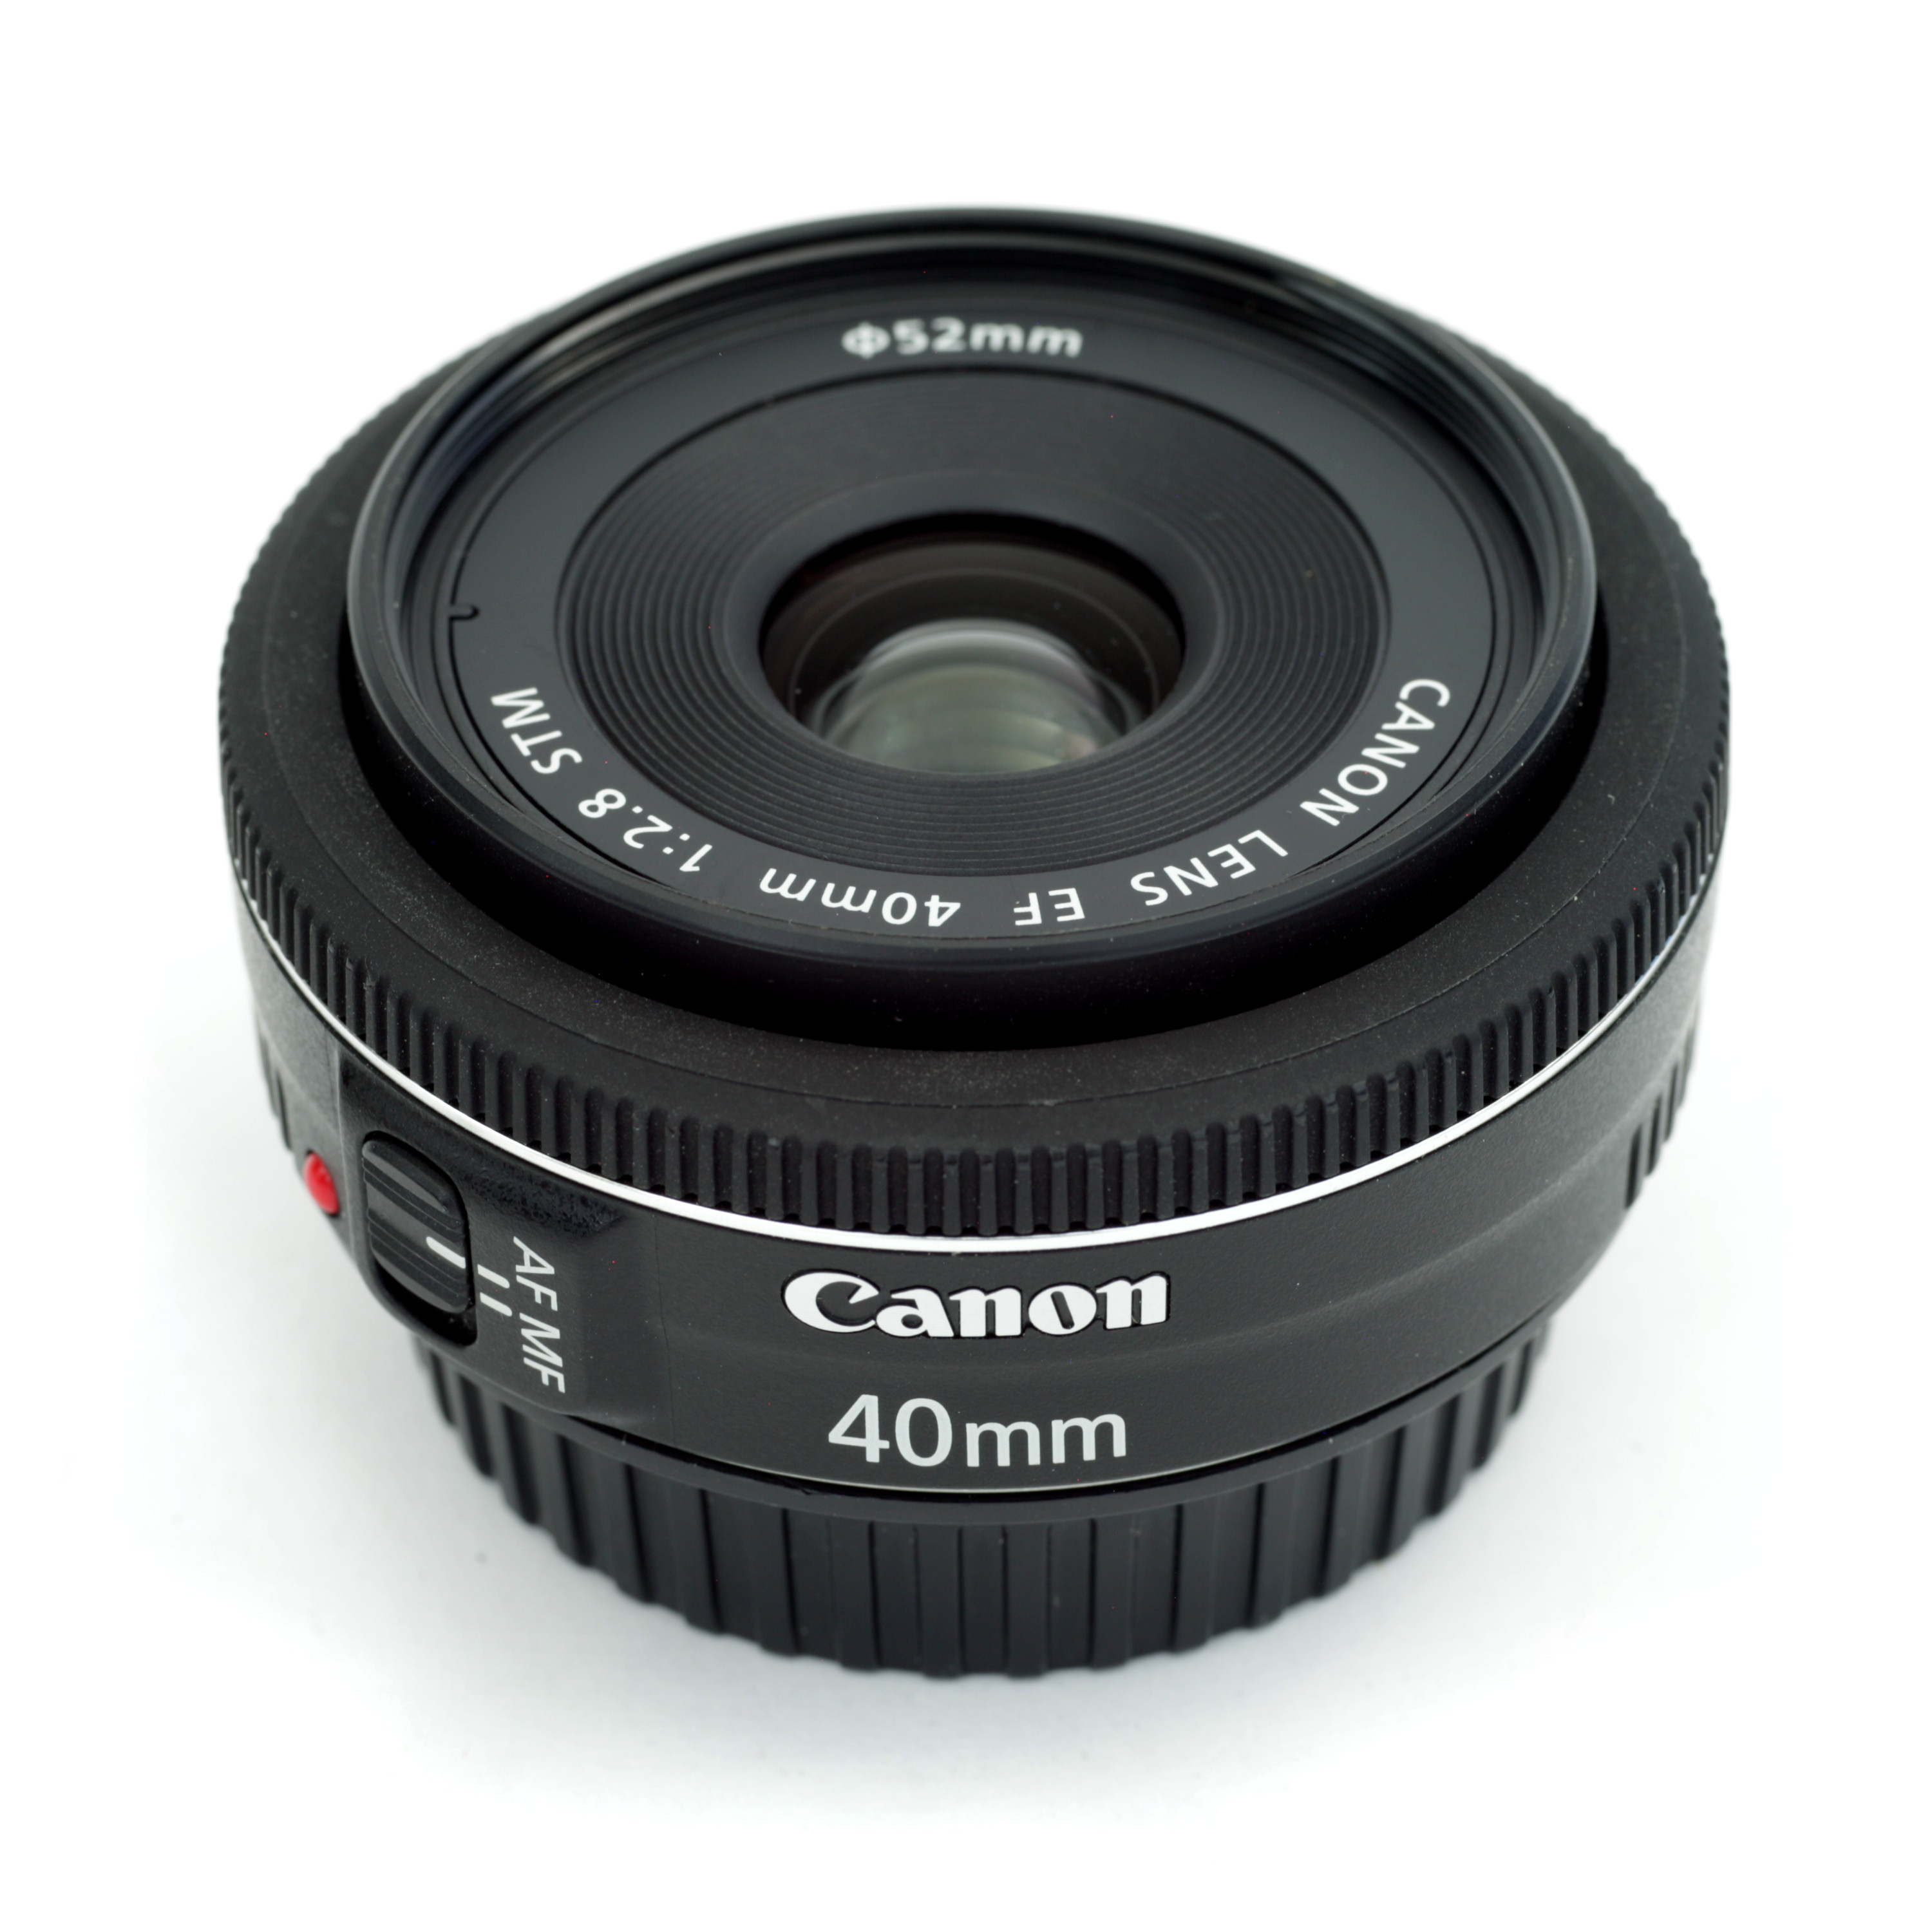 Canon EF 40mm lens - Wikipedia